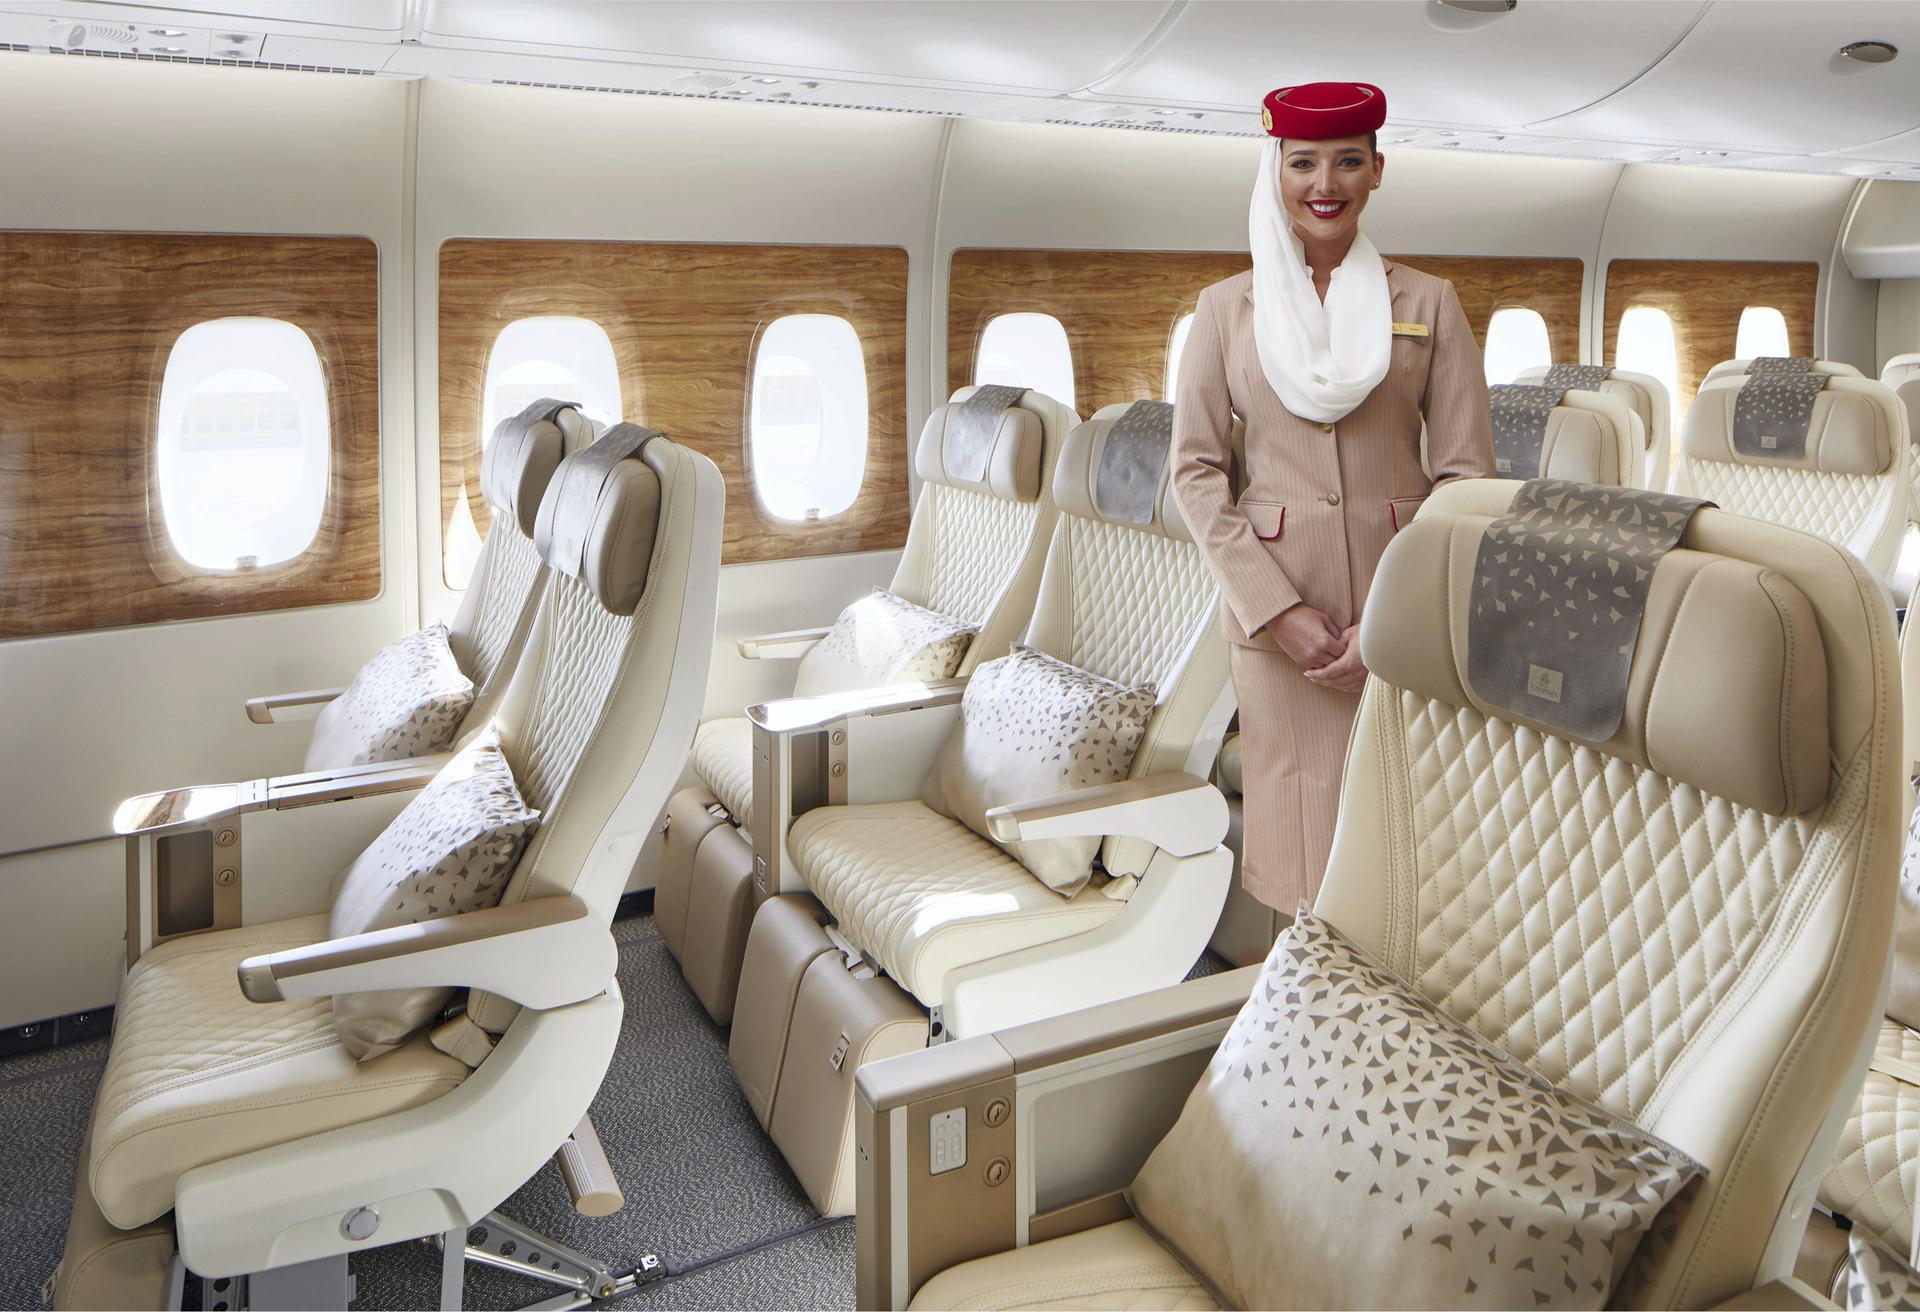 Leather Seats To Luxury Washrooms: Emirates’ New Premium Economy Cabins Scream Luxury